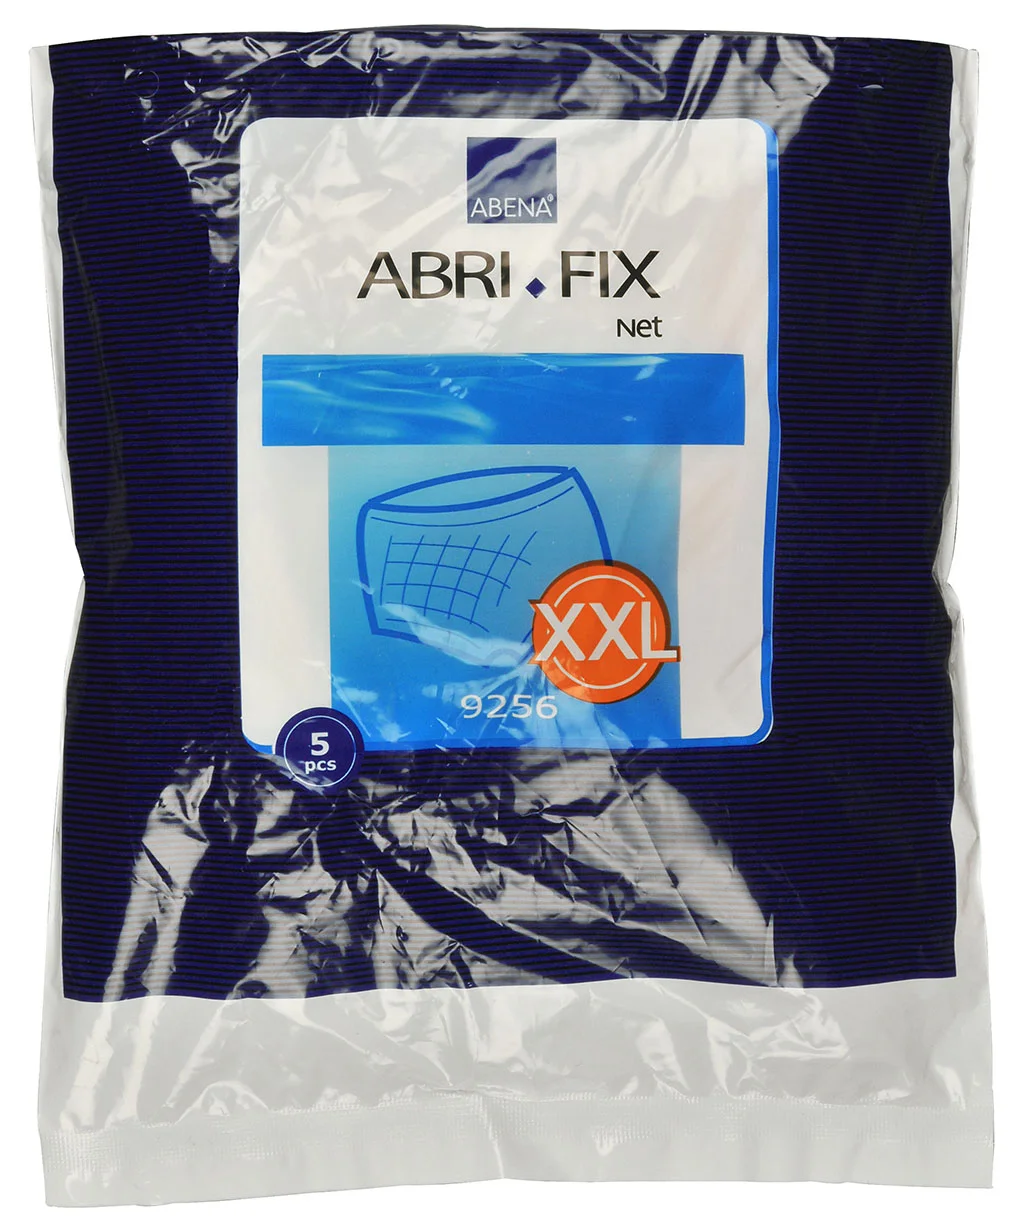 Abri Fix Abena. Abri-Fix фиксирующее белье. Сетчатые трусы Abena Fix. Fix net